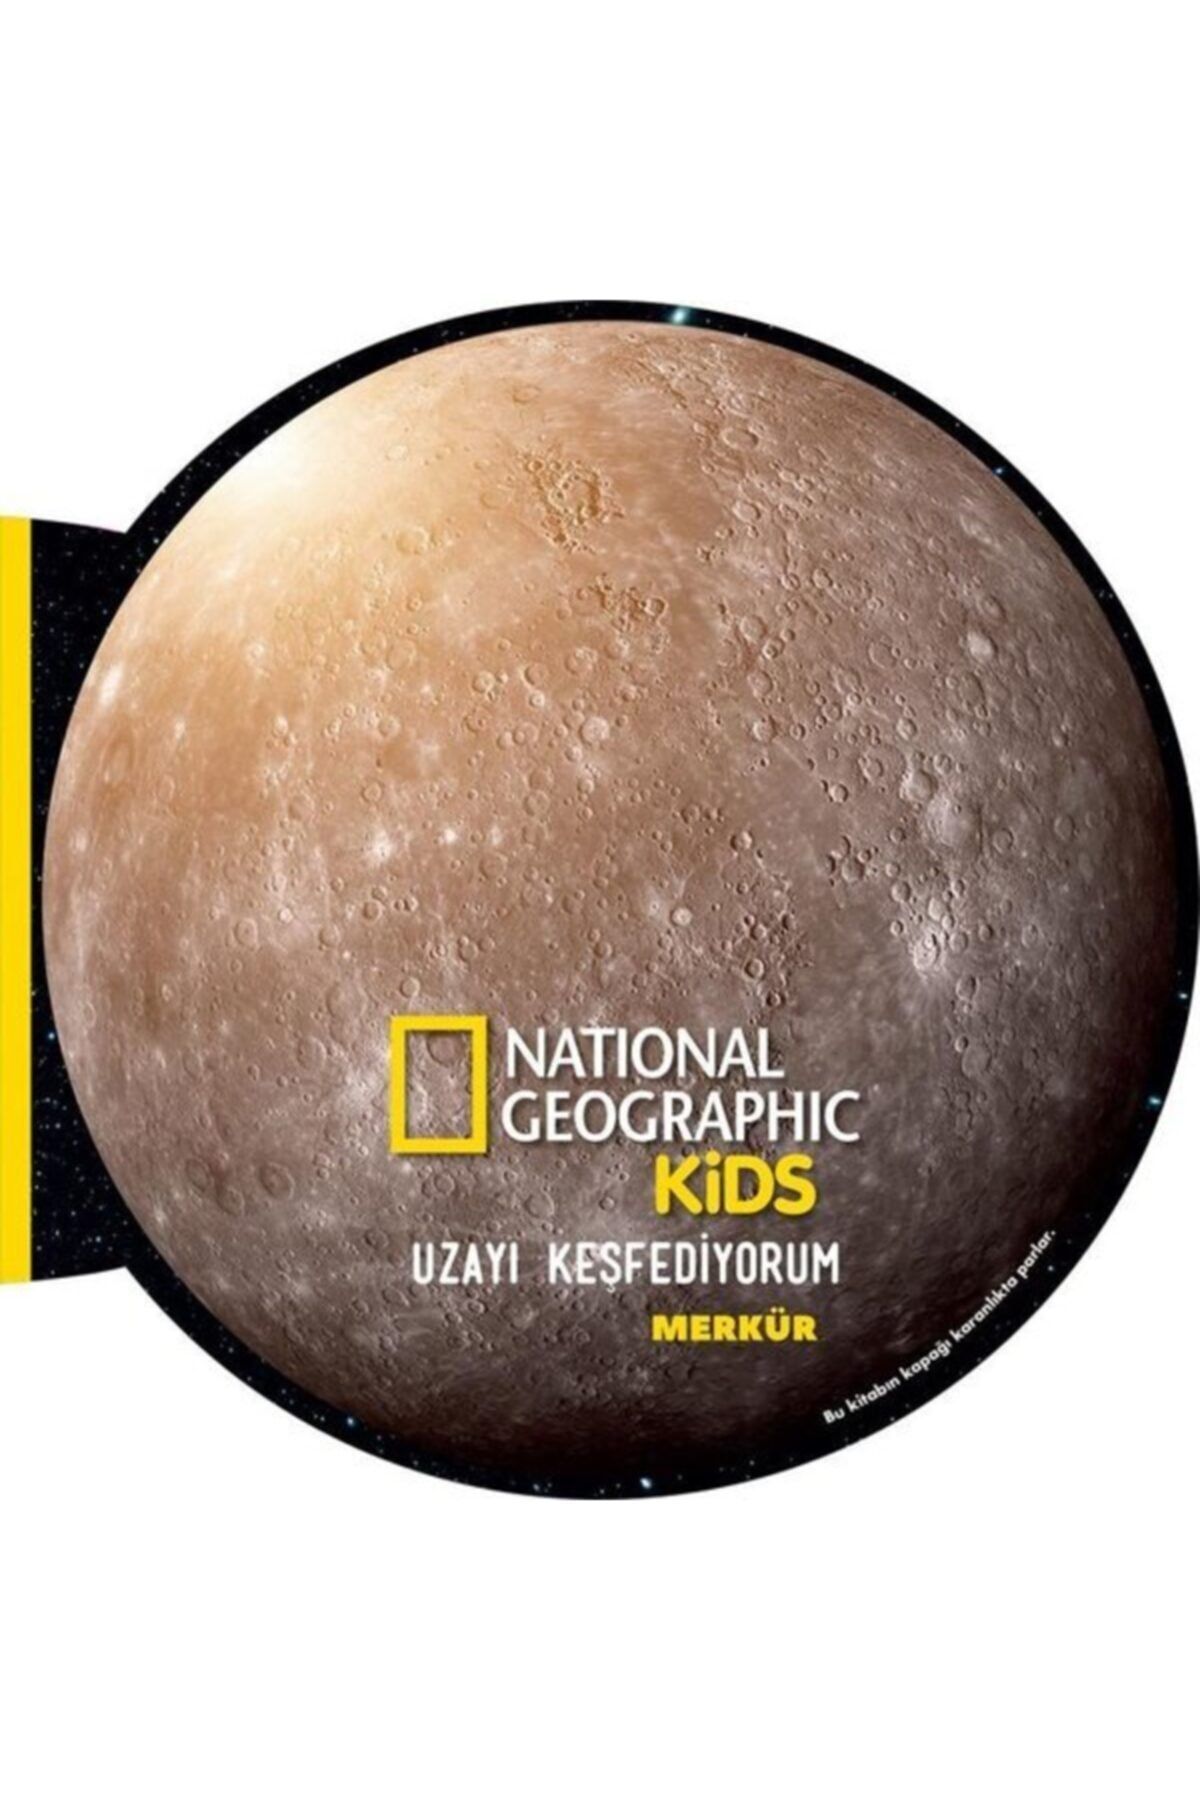 National Geographic Uzayı Keşfediyorum Merkür - National Geographic Kids